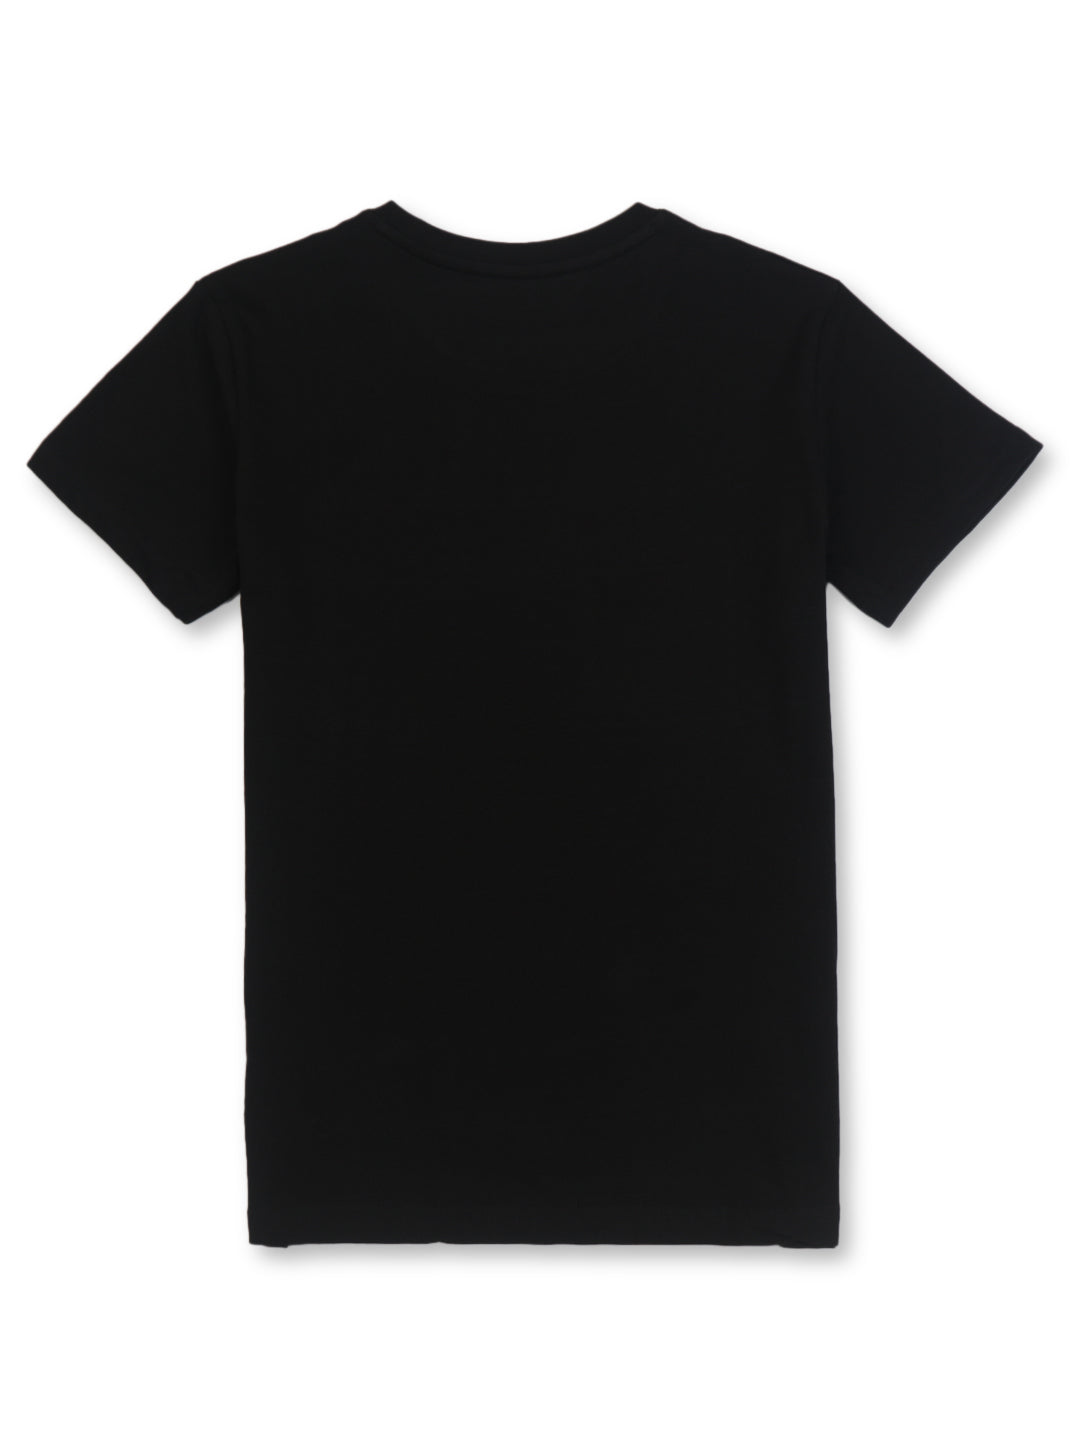 Boys Black Printed  Cotton T-Shirt